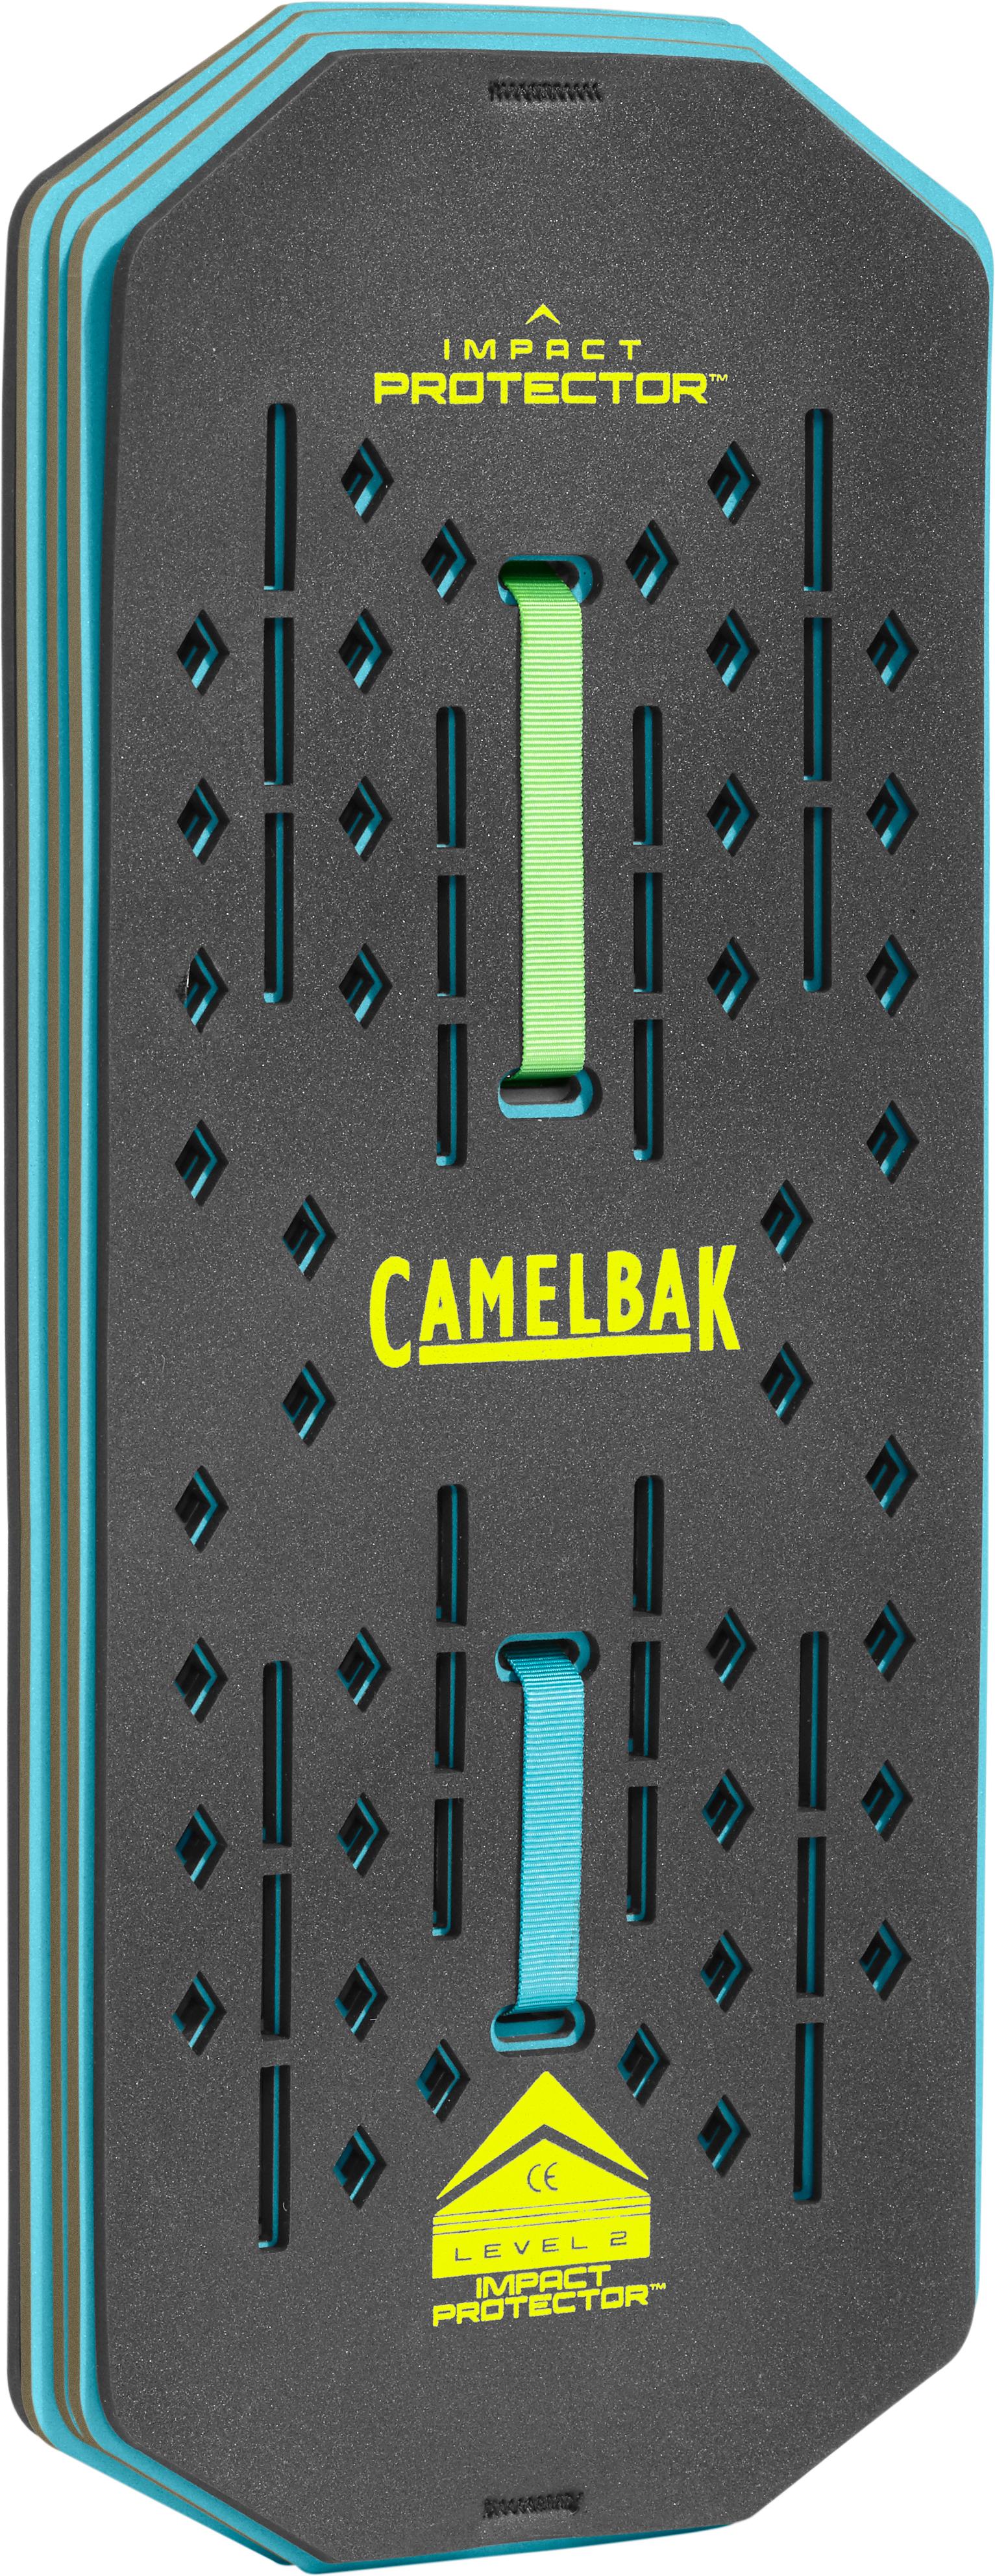 Camelbak Impact Protector Panel - Black/Teal